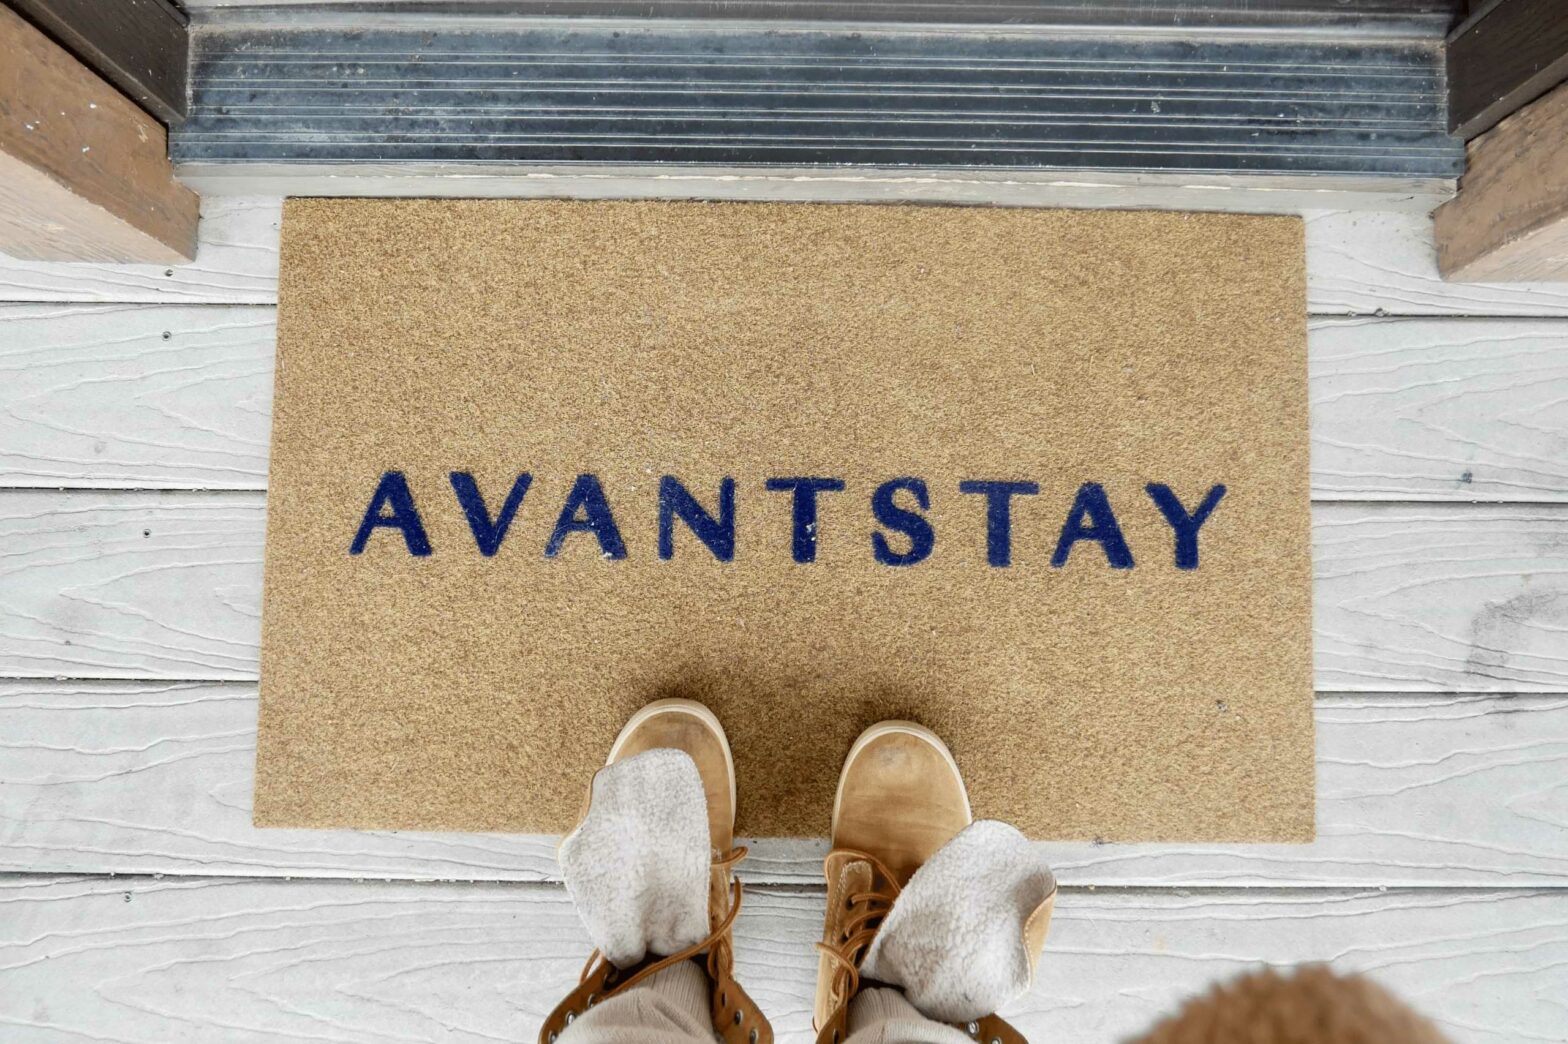 choosing between airbnb vs hotel, you should go with avantstay